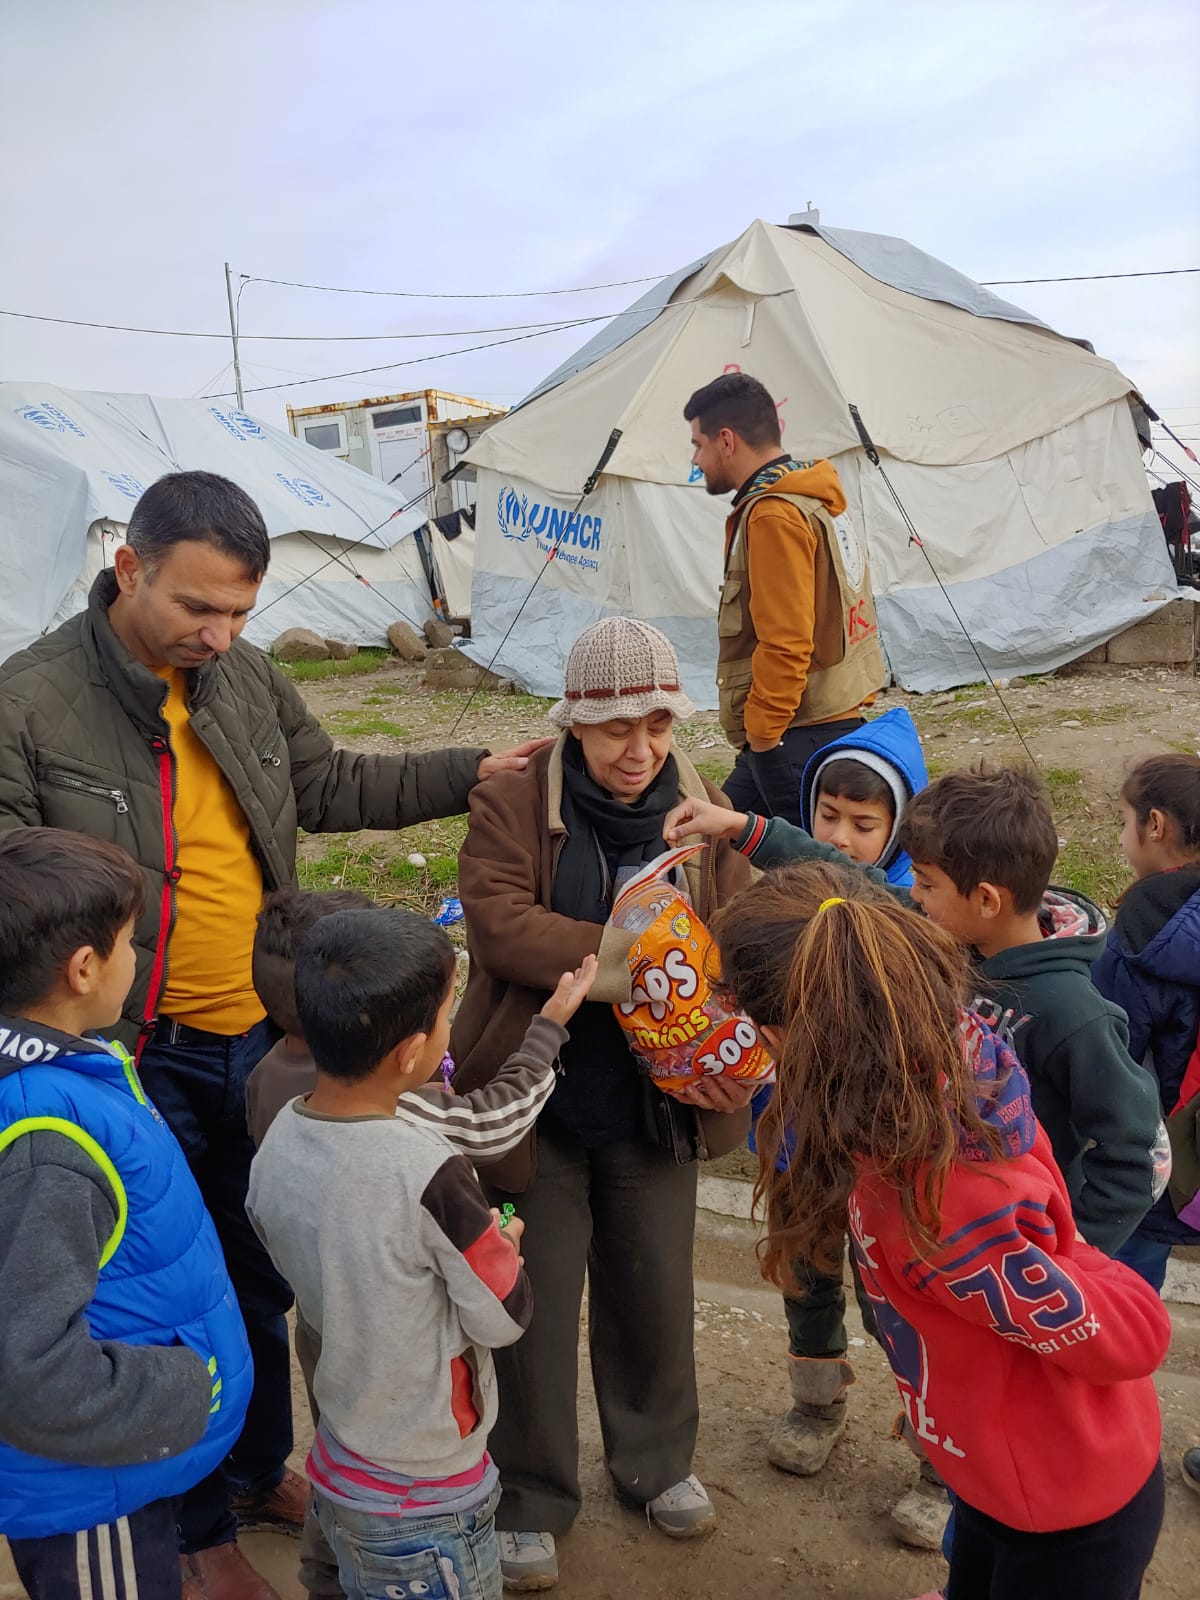 December 2020 Update: Bringing help to refugees in spite of COVID-19